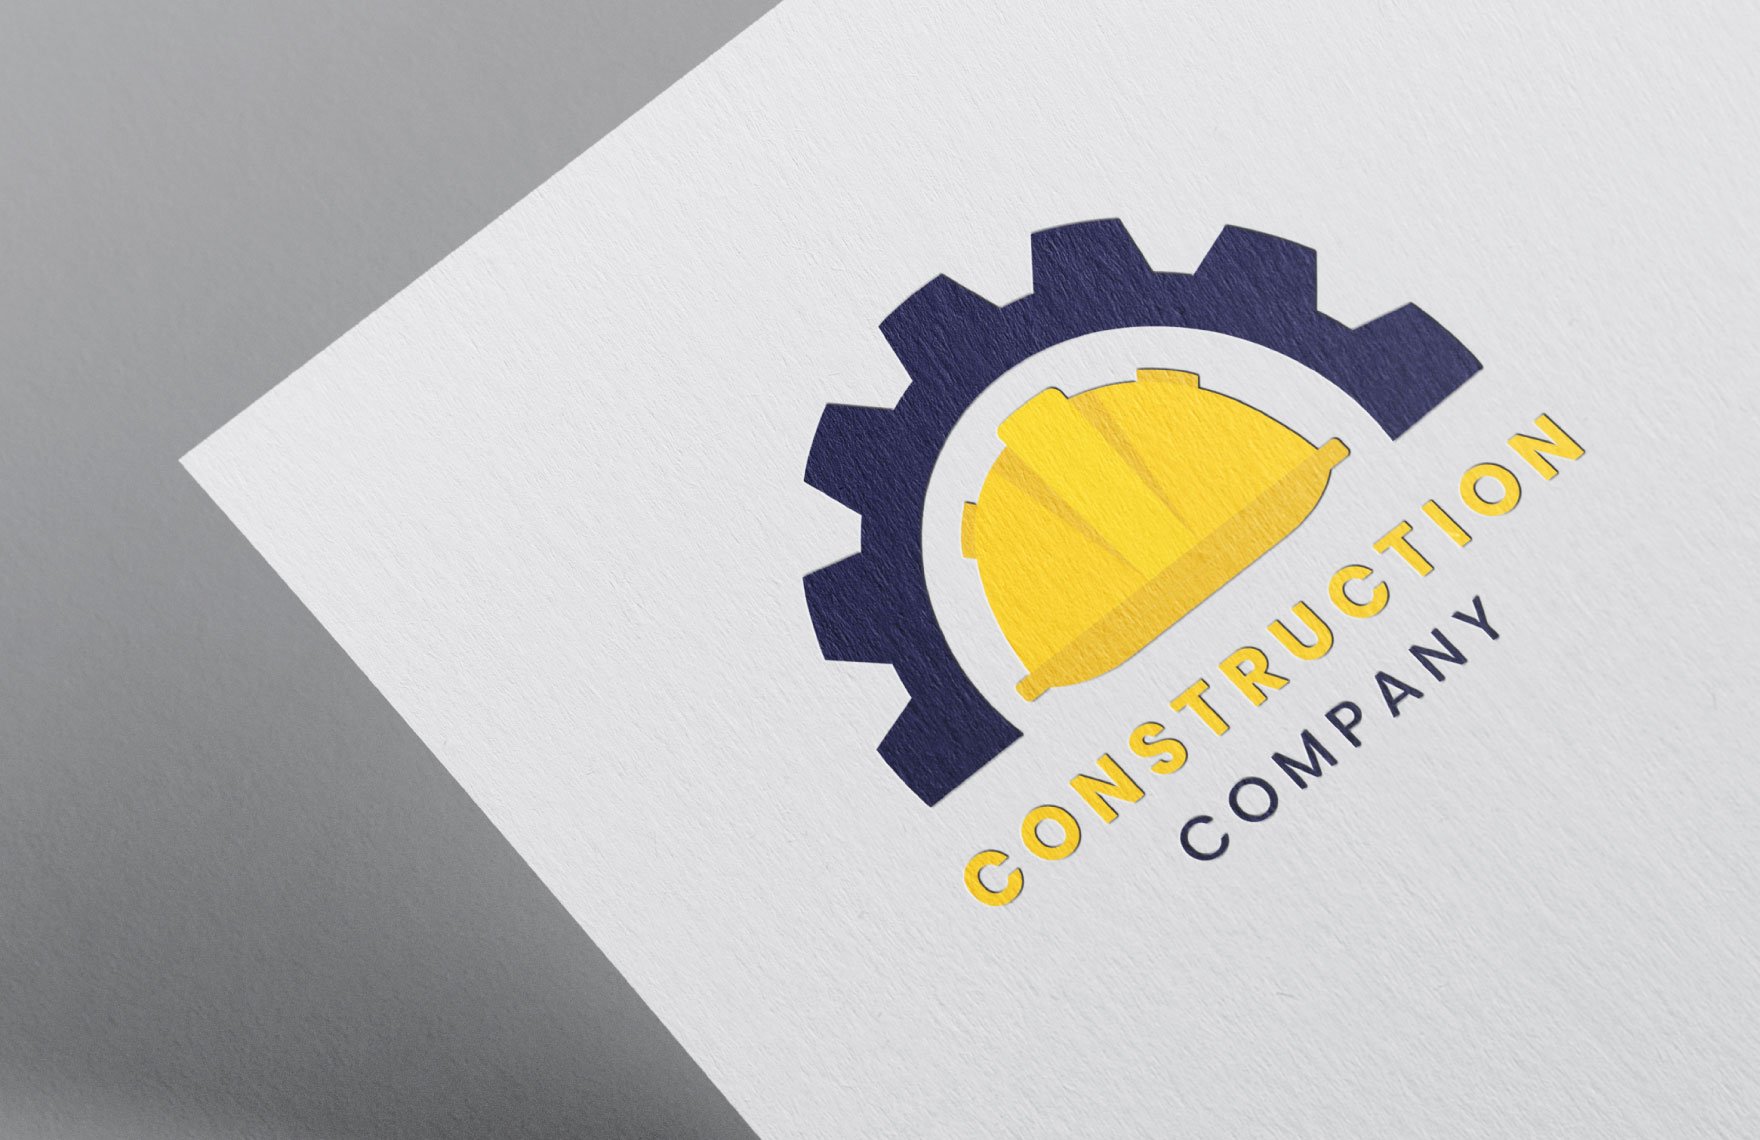 Construction Safety Logo